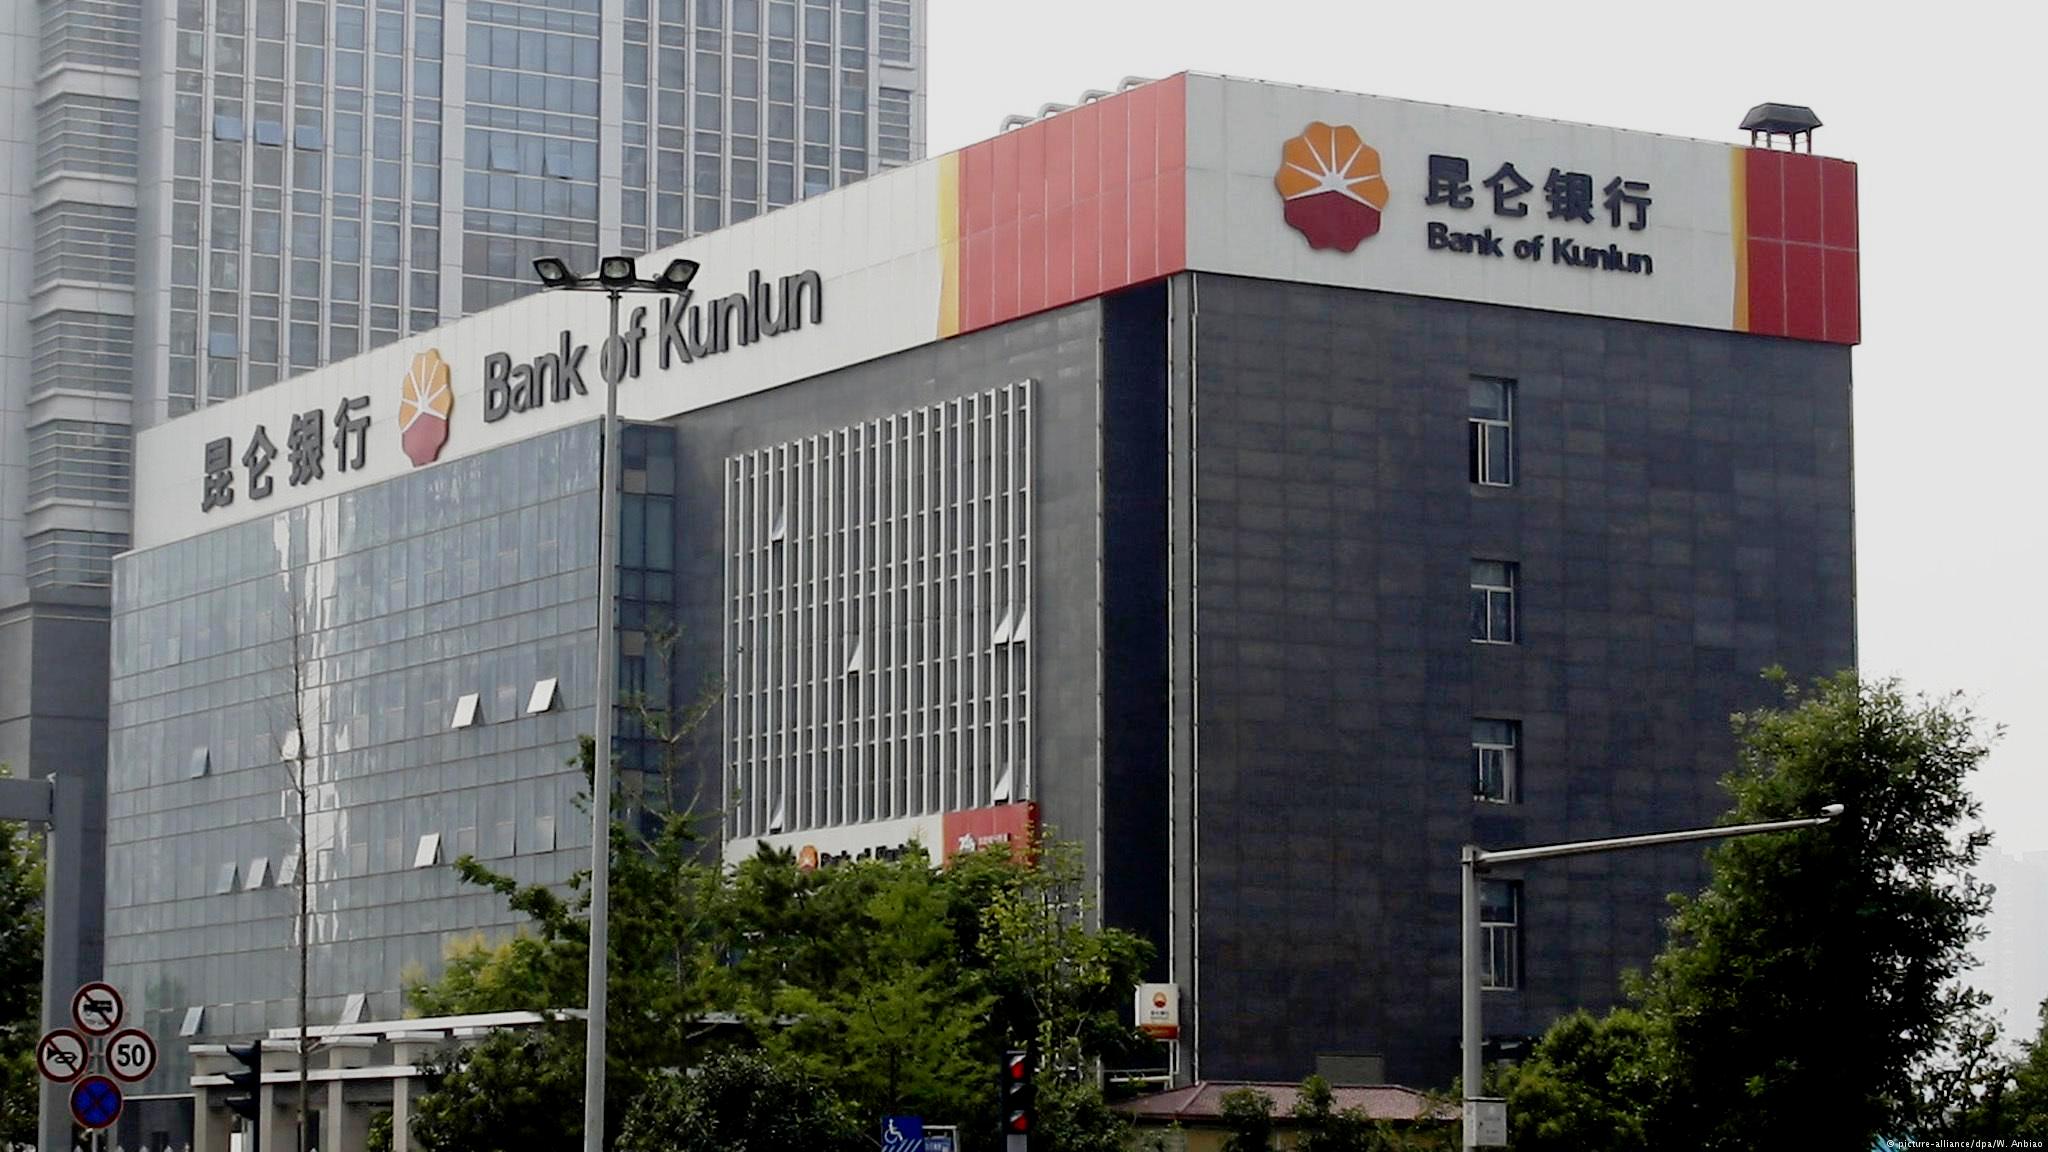 Kunlun банк. Банк Китая. Банки Китая. Bank of Kunlun. Банк Куньлунь.